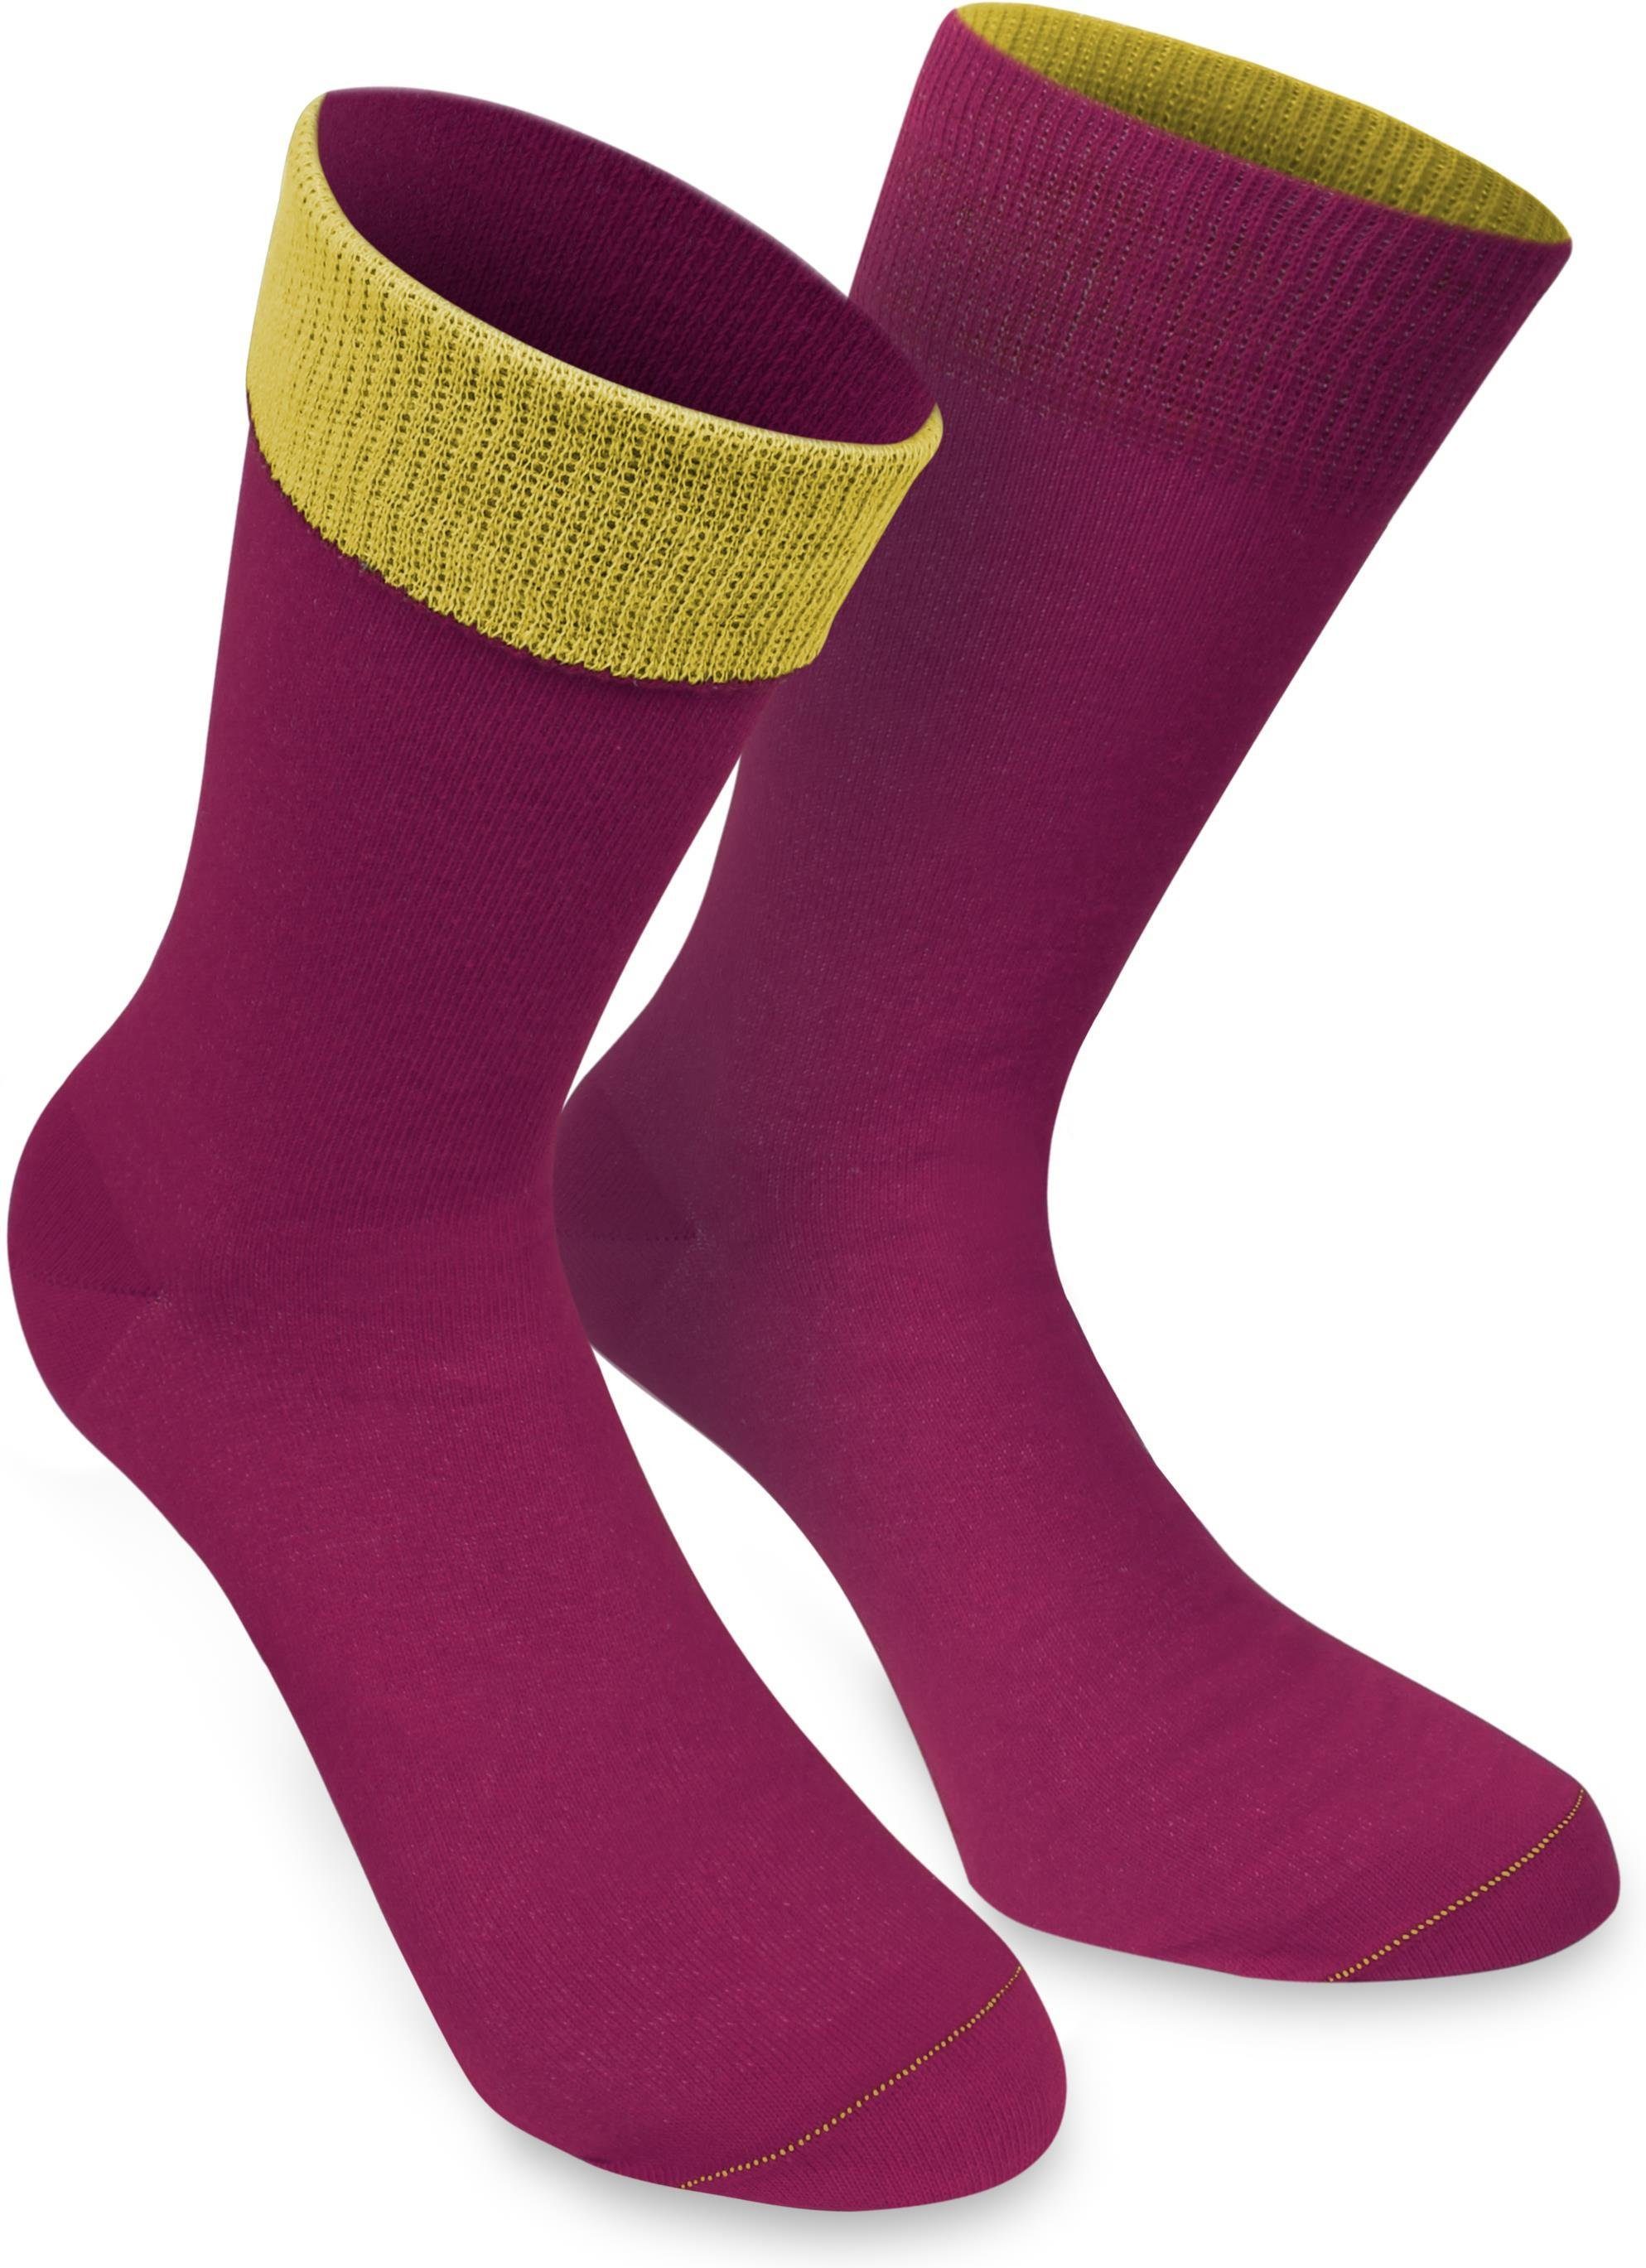 Bi-Color Basicsocken normani farbig Magenta/Gelb Bund Socken 1 Paar) Paar abgesetzter (1